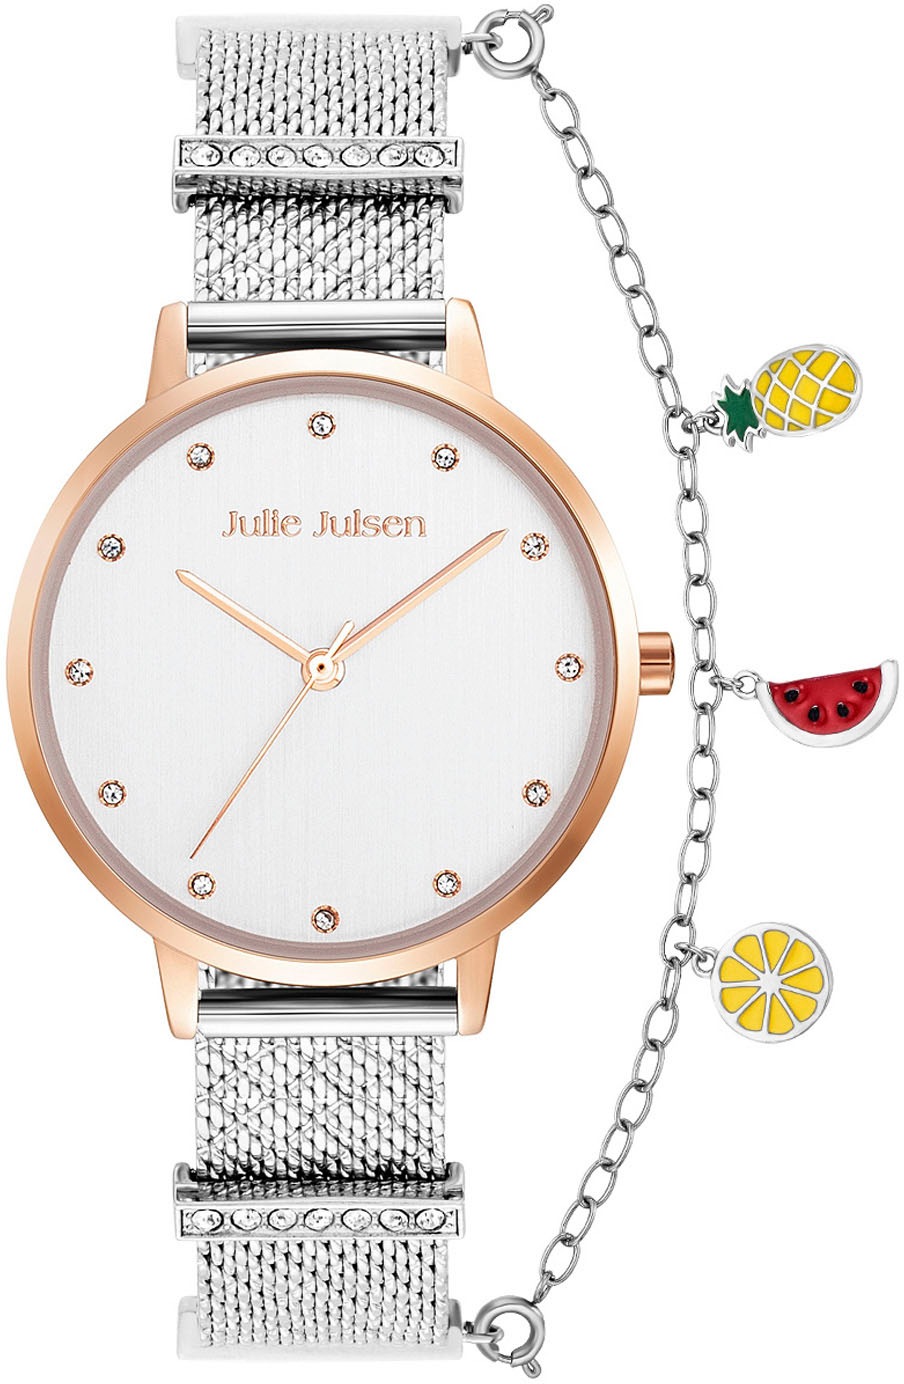 Julie Julsen Quarzuhr »Julie Julsen Charming Bicolor Dots, JJW1231RGSME-34-1«, Charminguhr, Glitzer